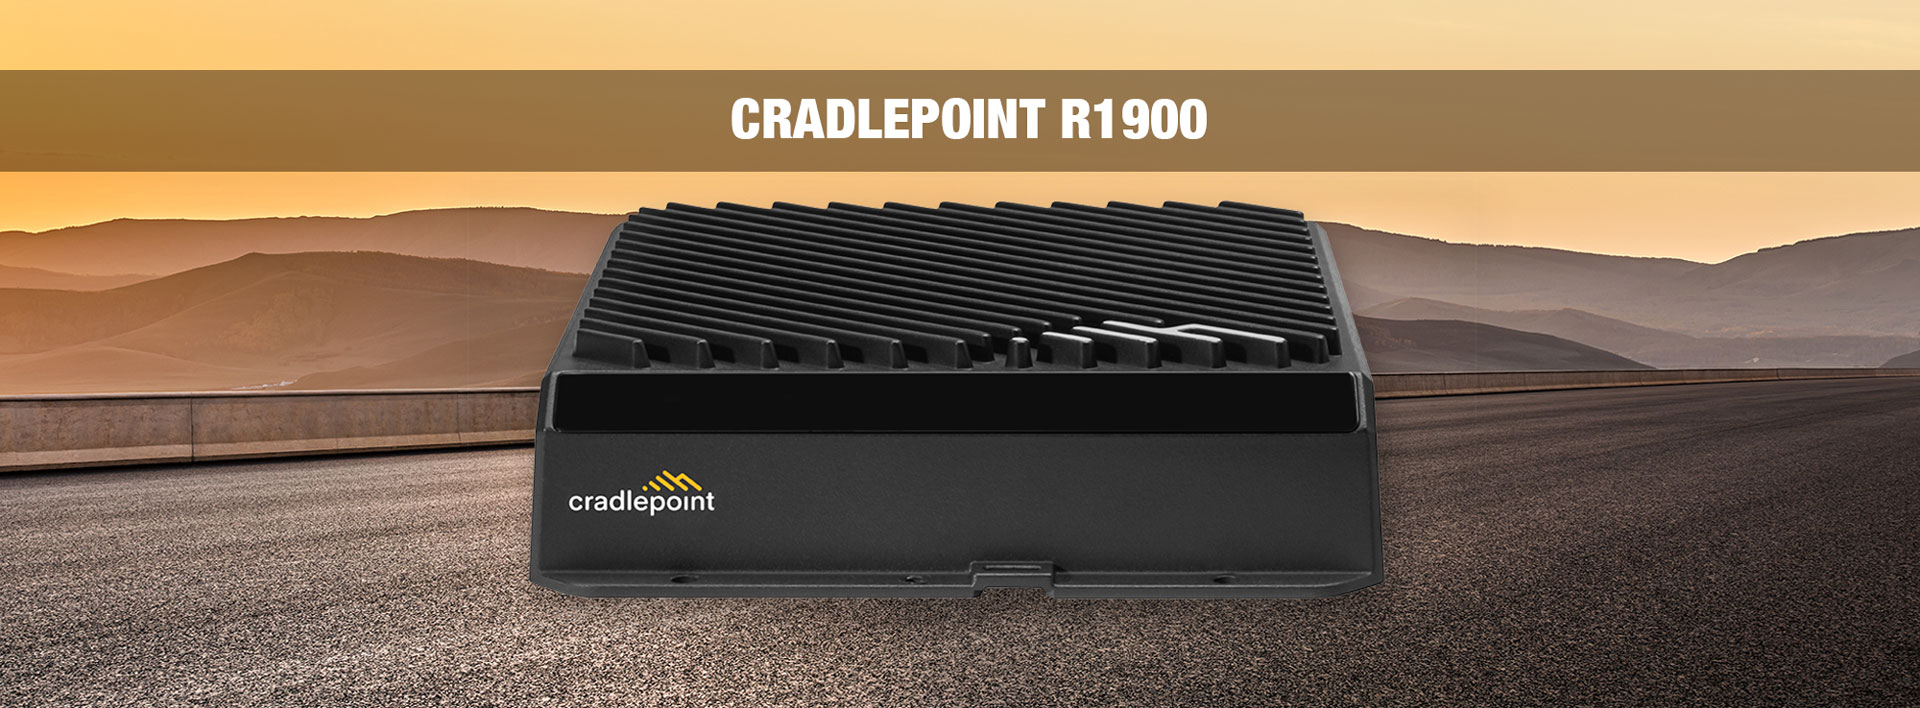 Cradlepoint R1900